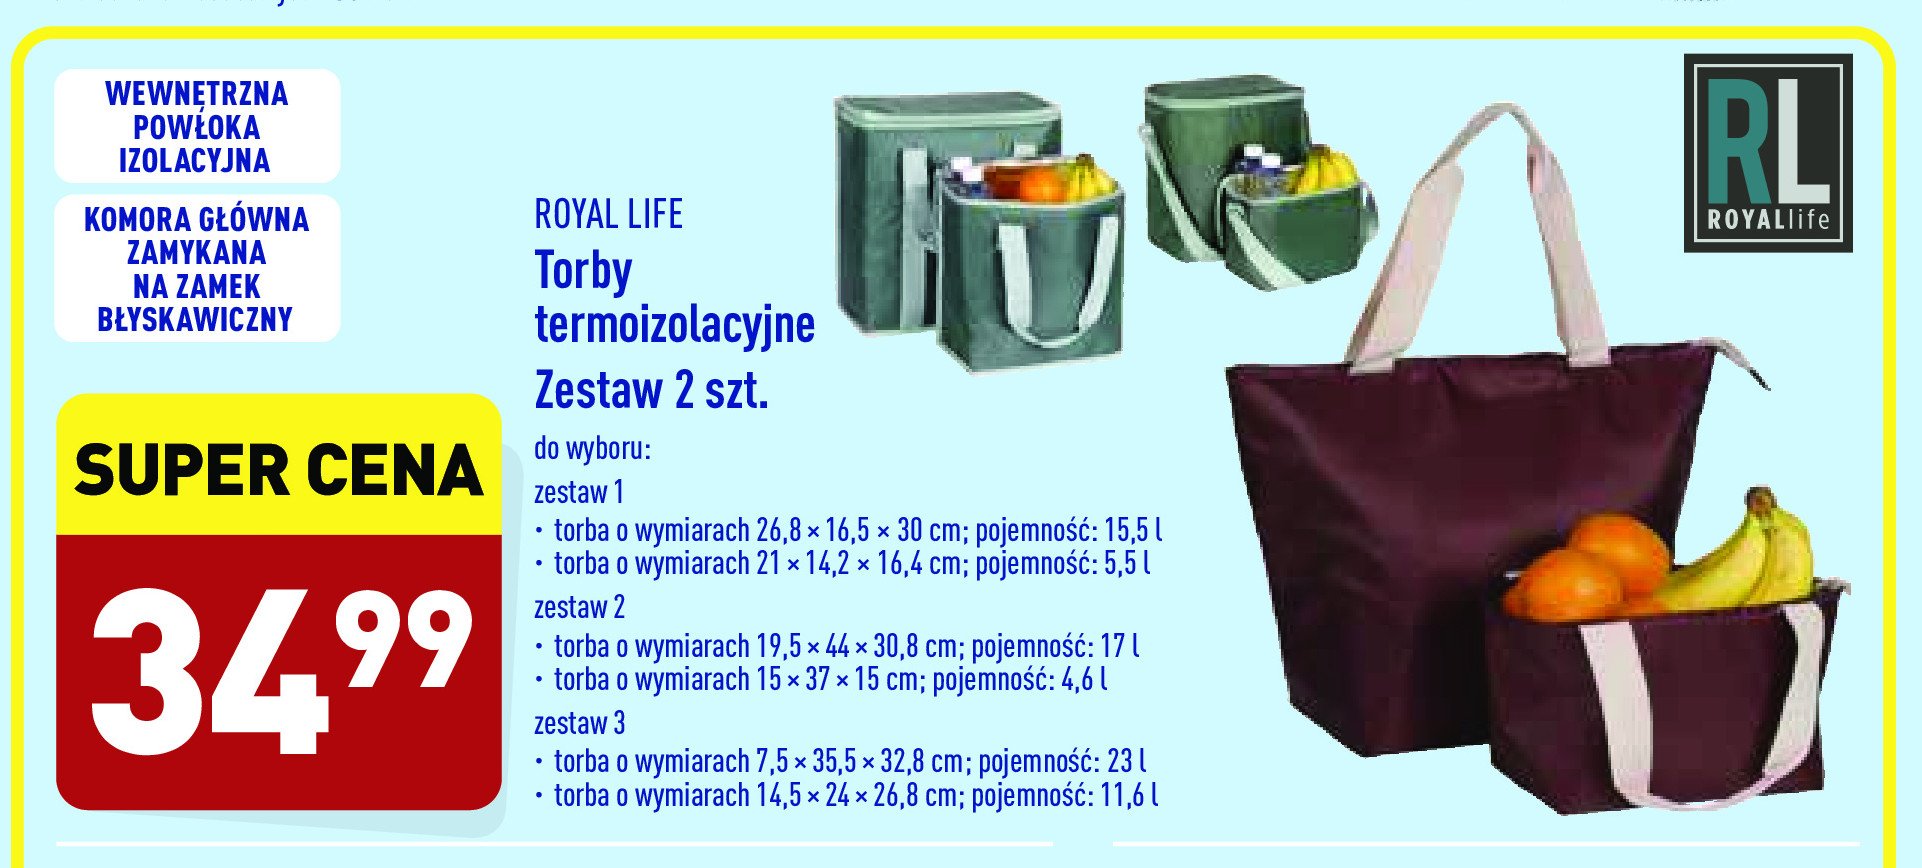 Torby termoizolacyjne 17 l + 4.6 l Royal life promocje